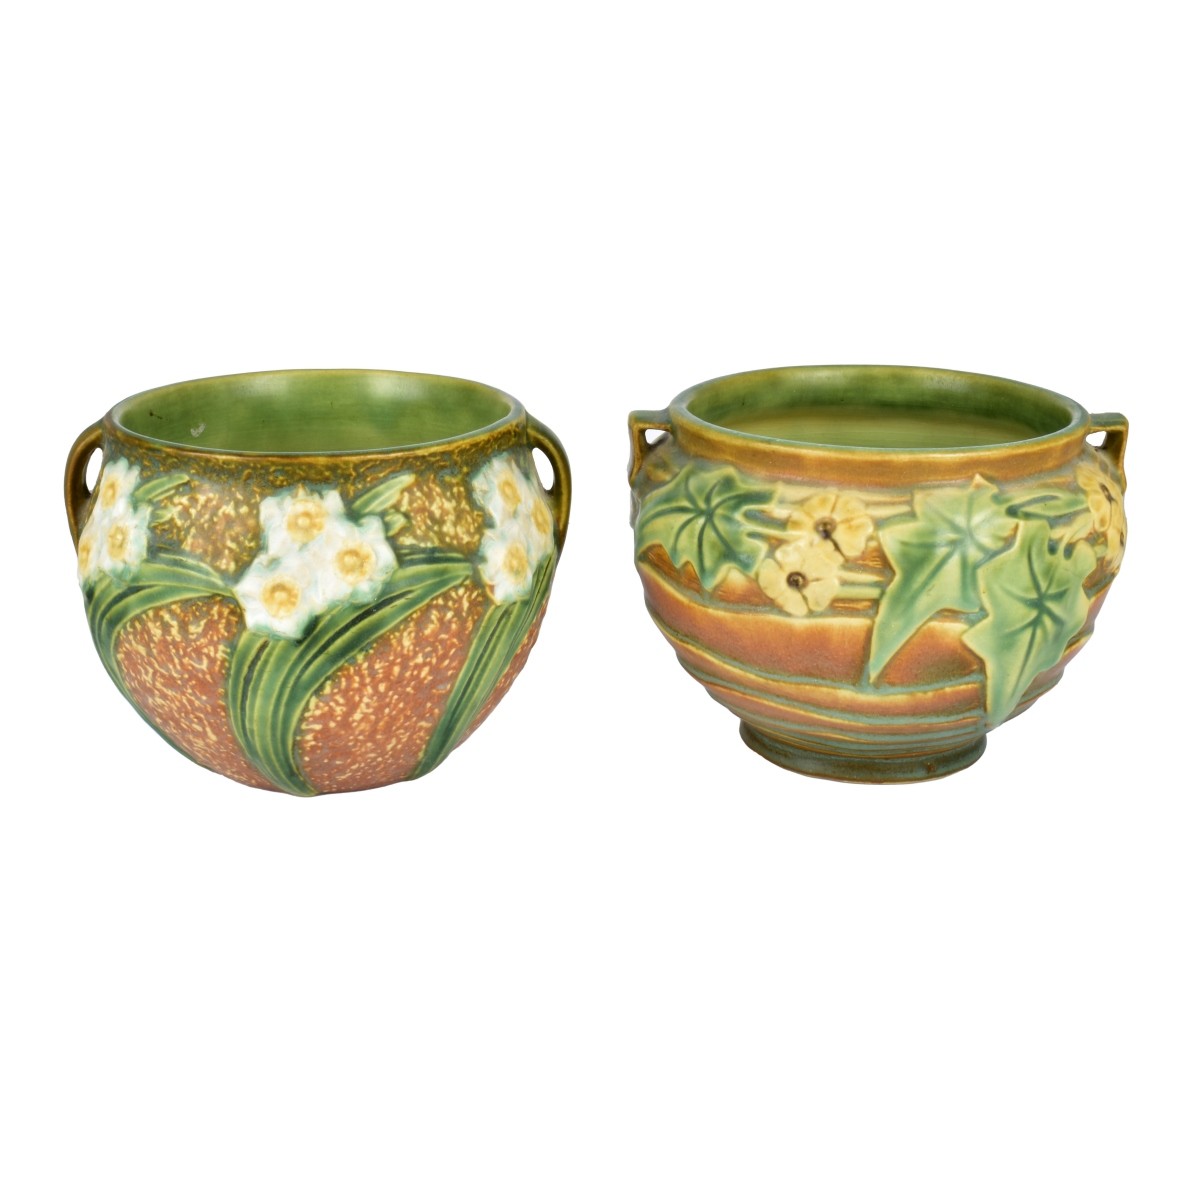 Two Antique Roseville Pottery vases